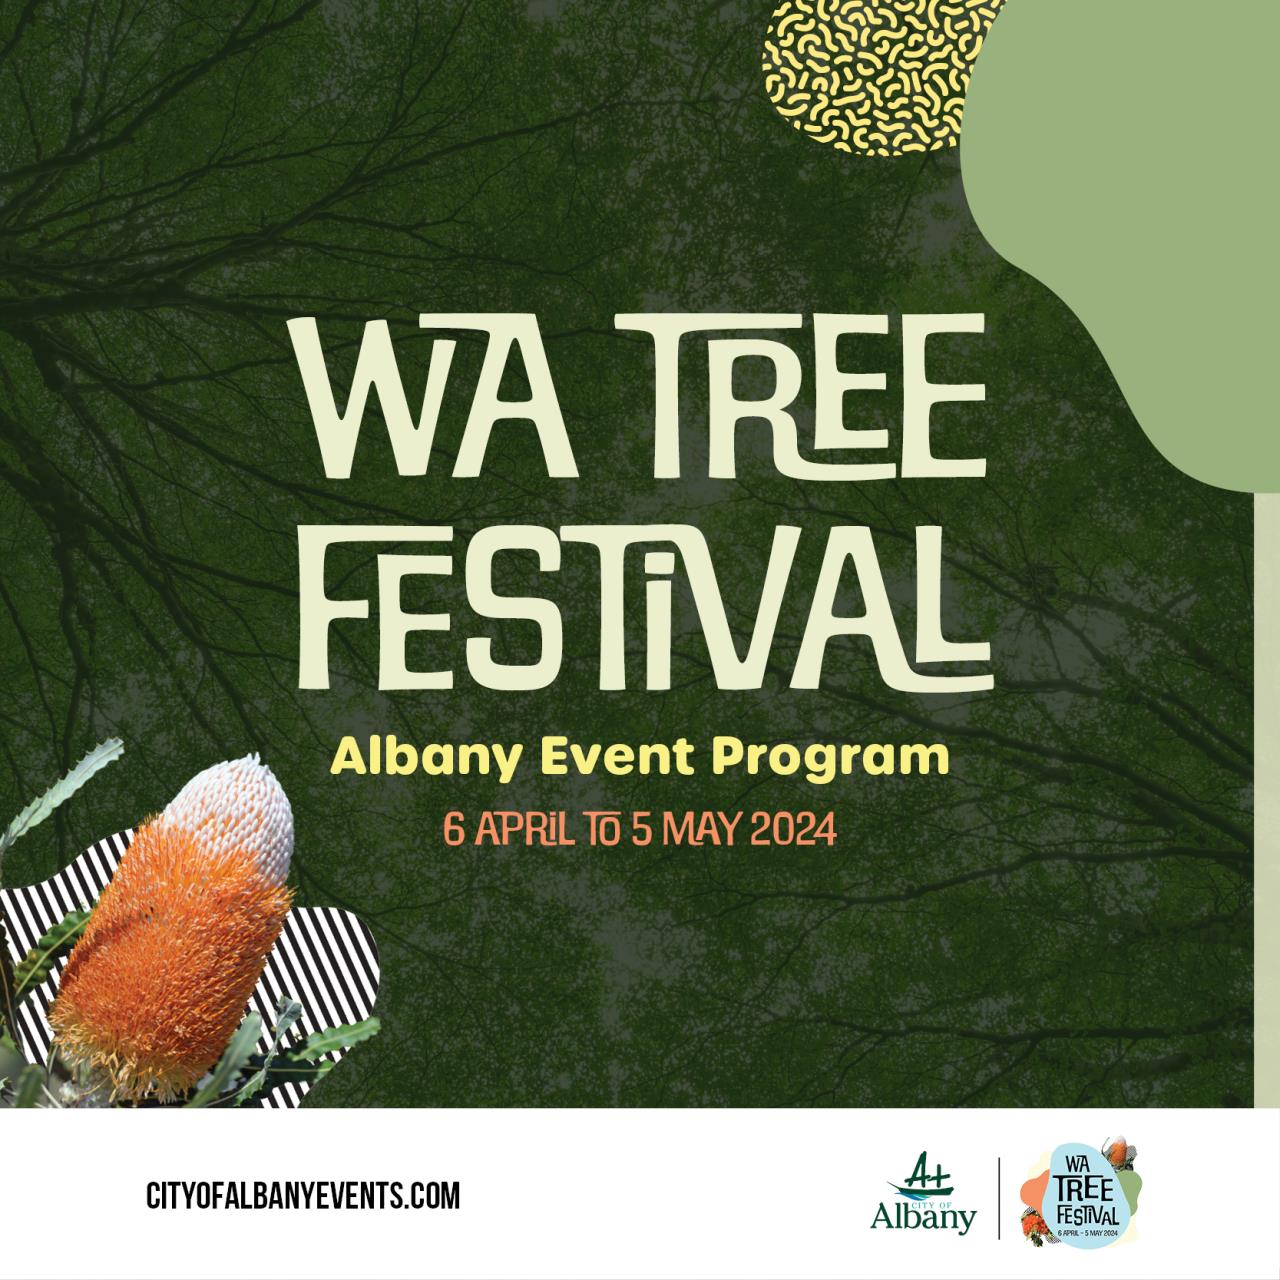 WA Tree Festival 2024: Albany Event Program